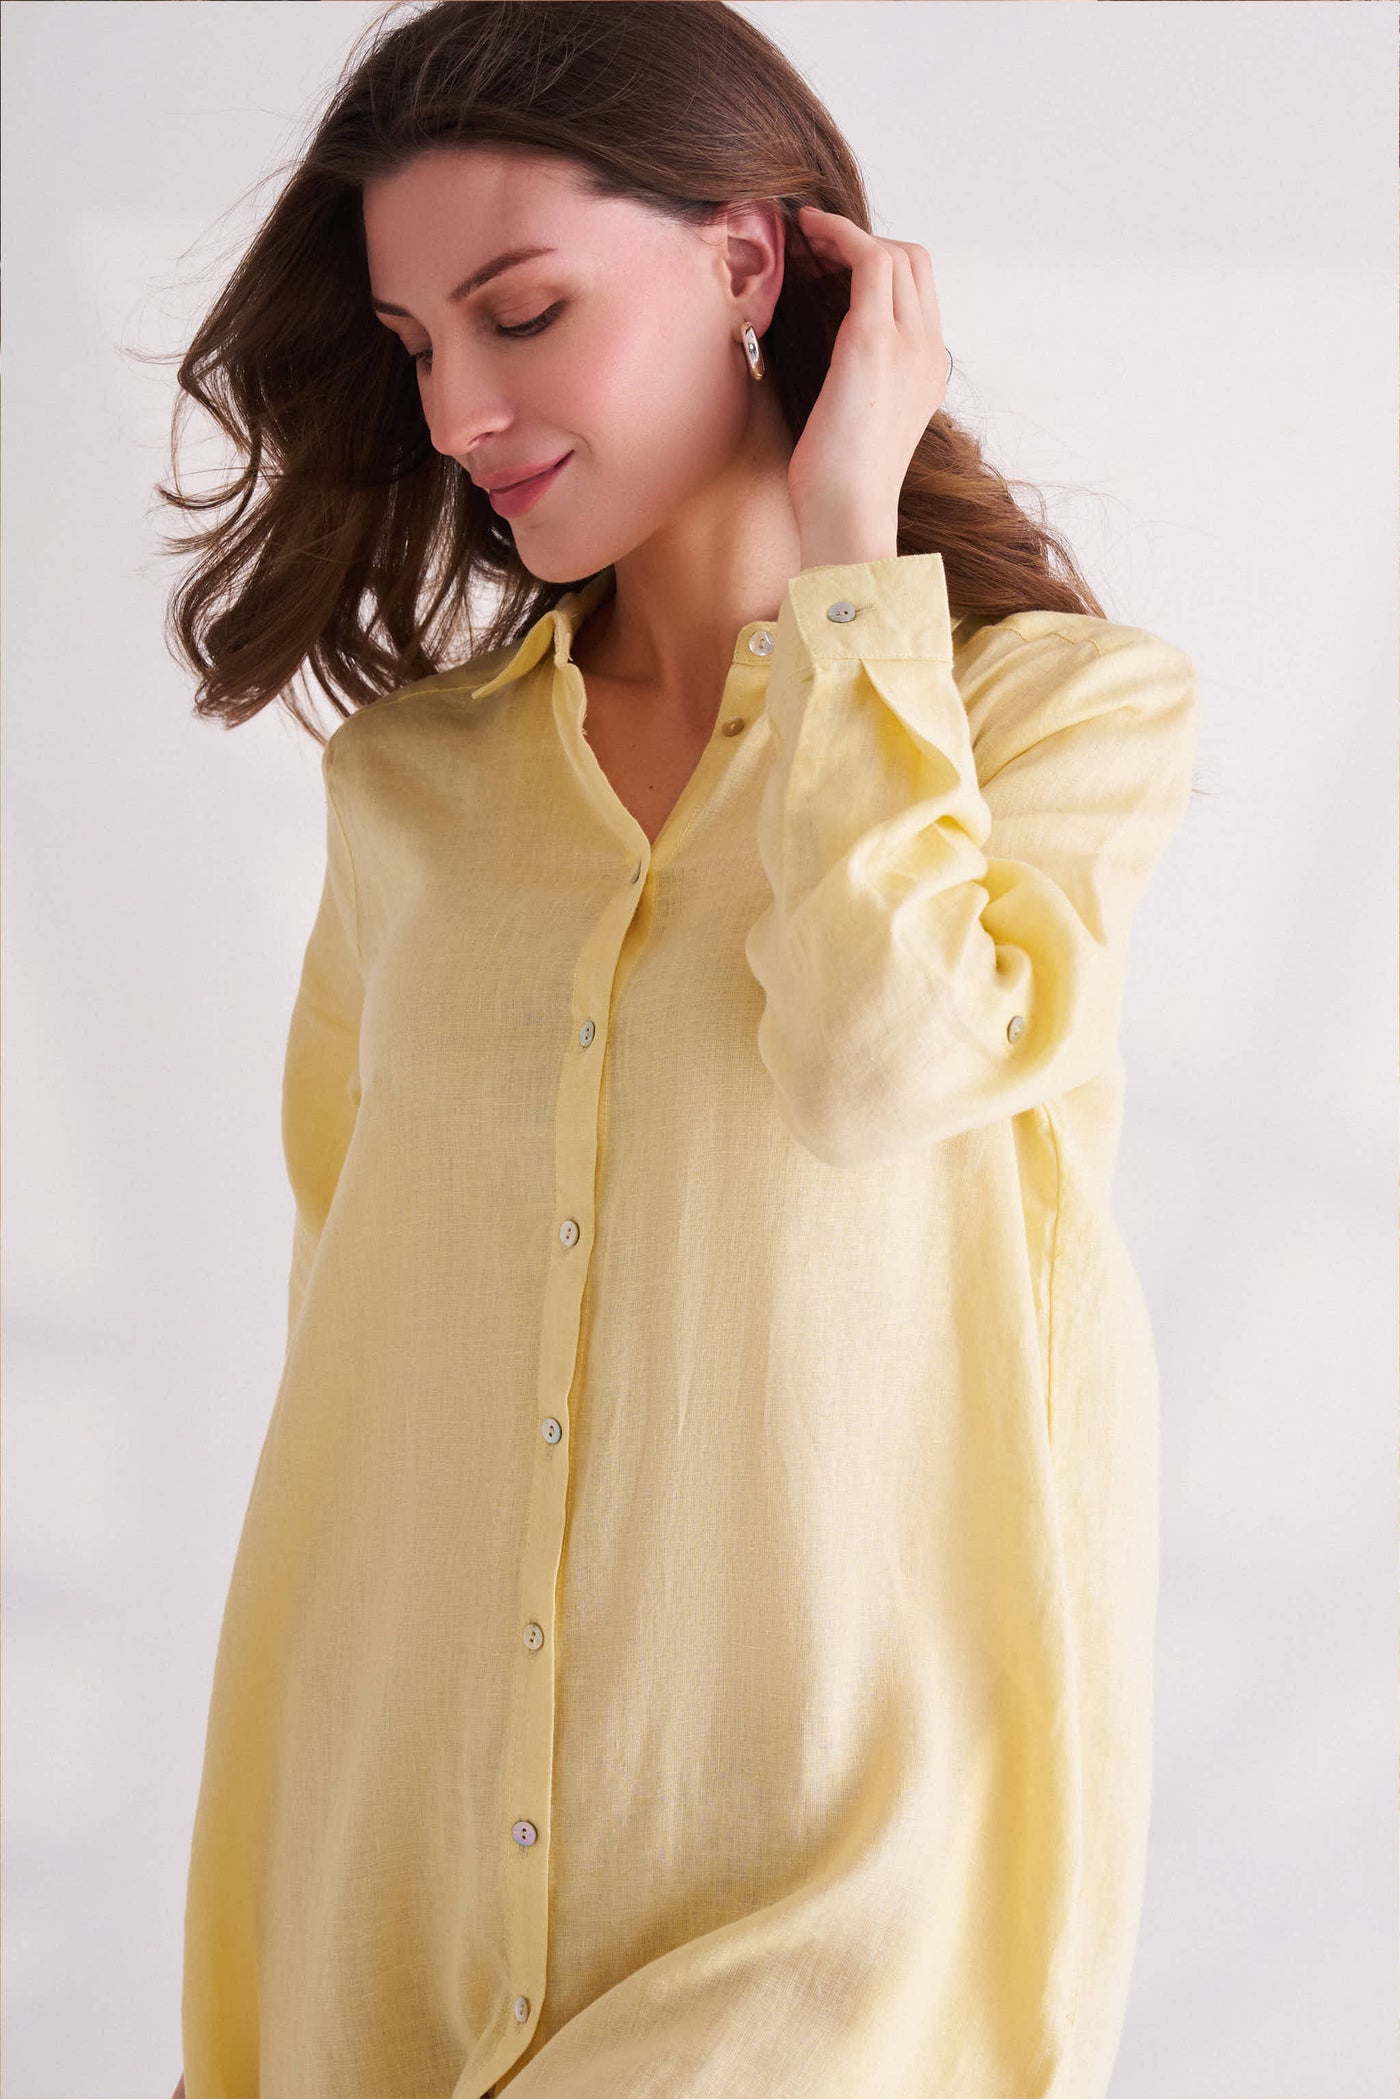 Straw Yellow Linen dress